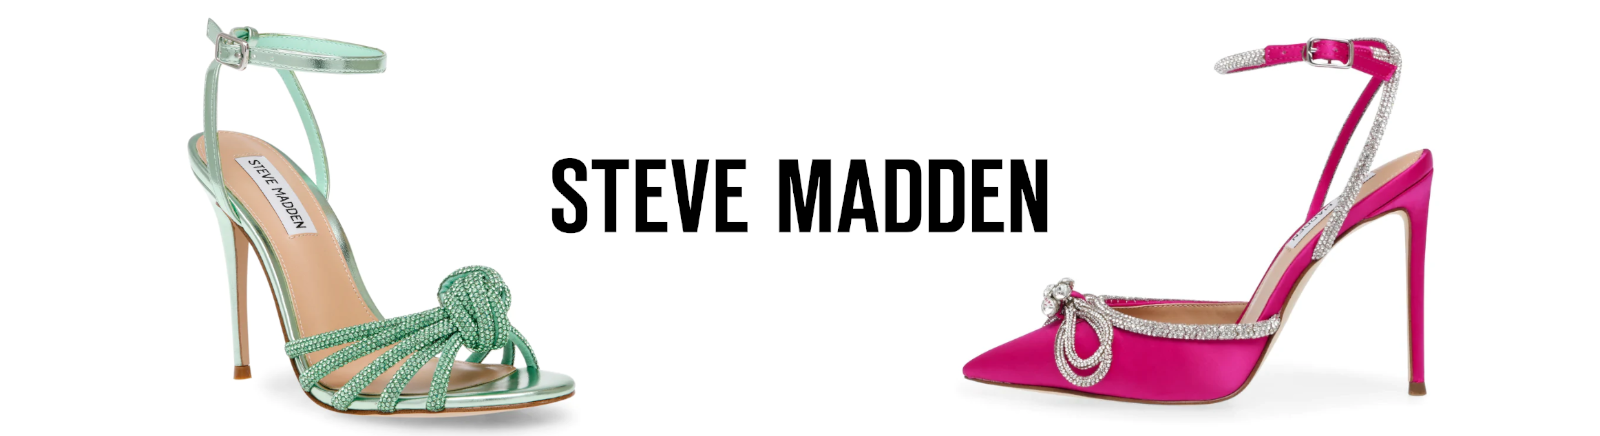 Steve Madden Sneaker bei GISY Schuhe online kaufen!